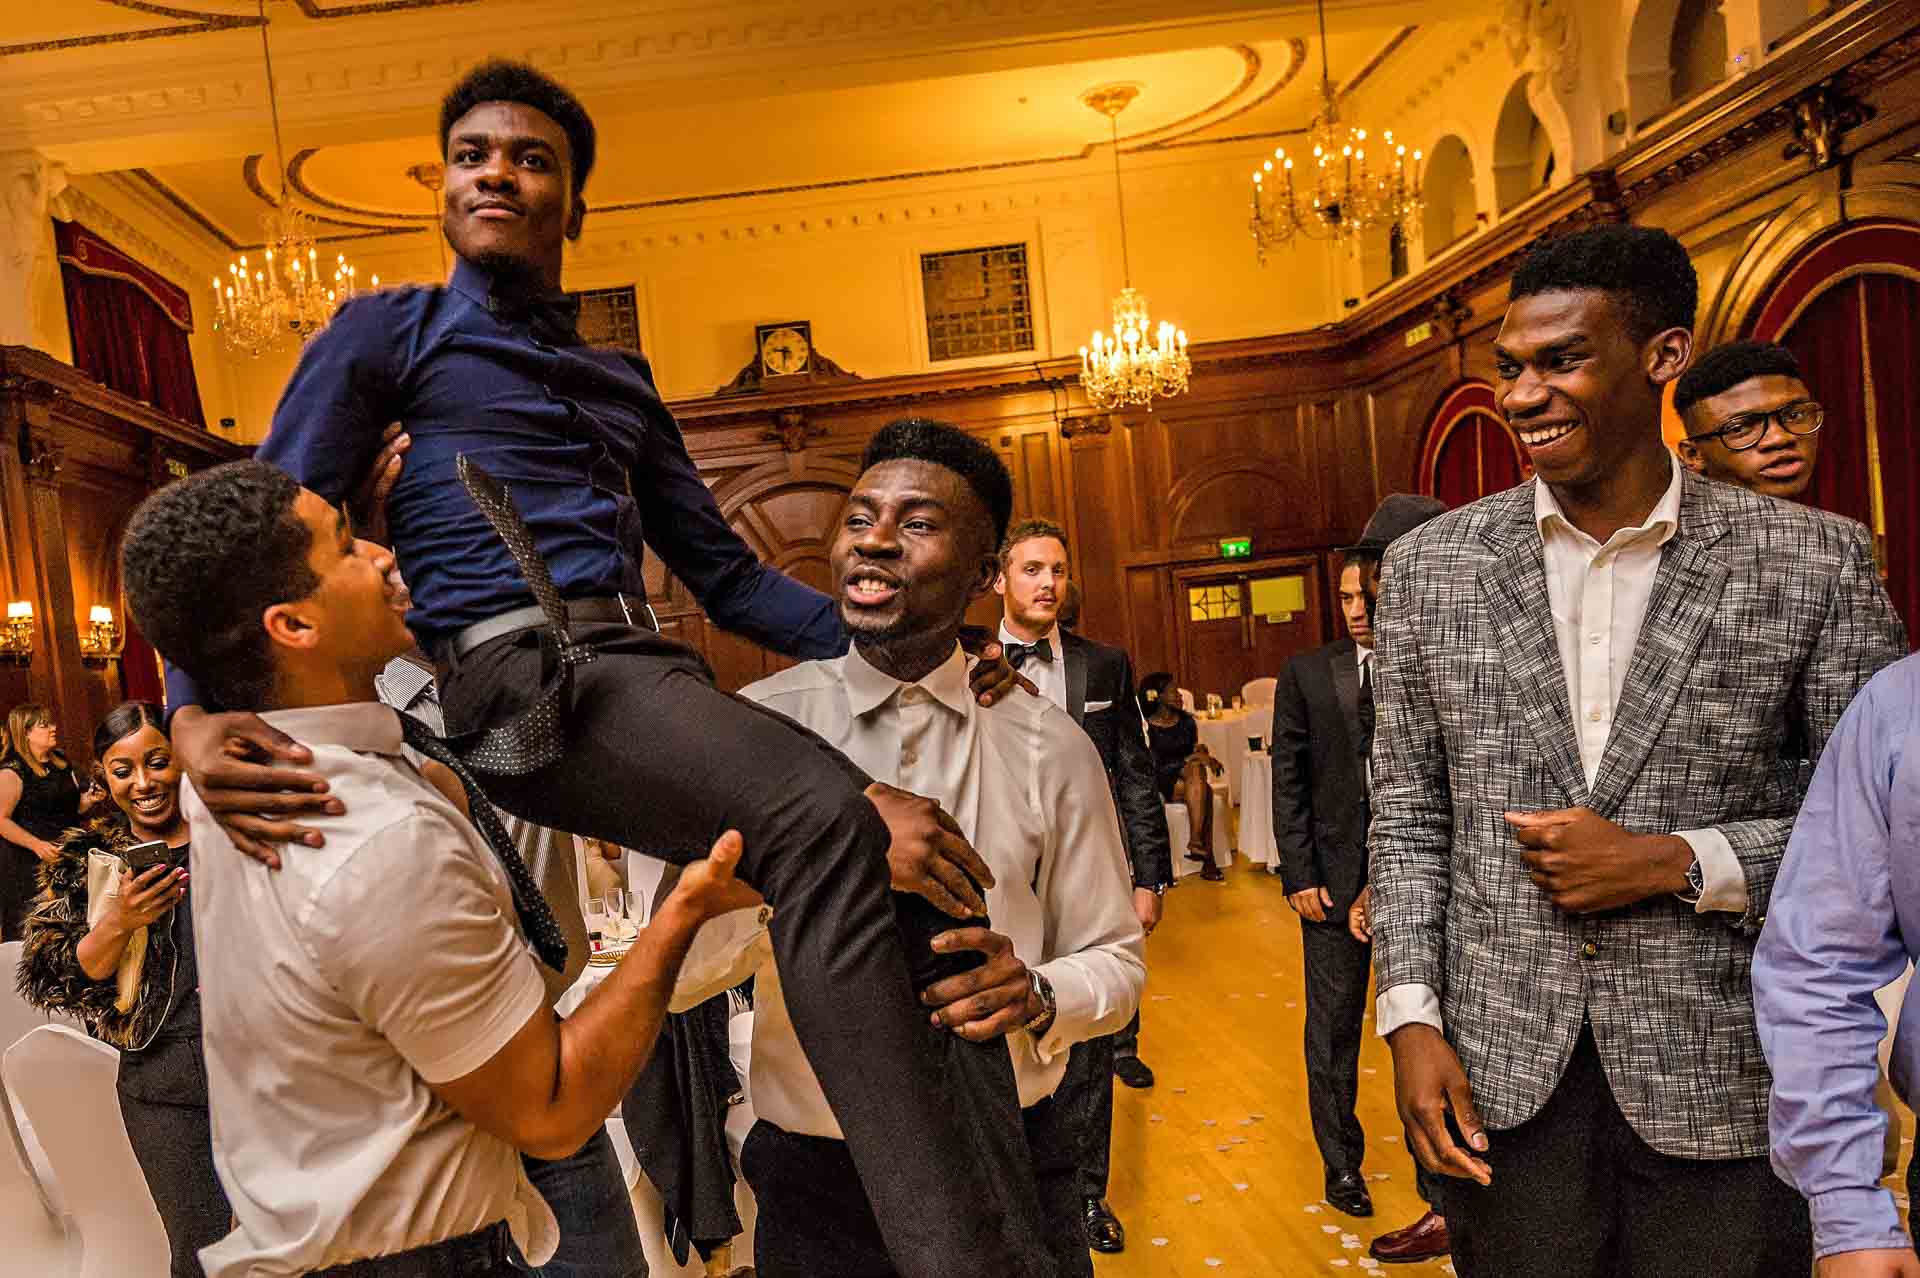 Men lifting up friend at wedding celebration